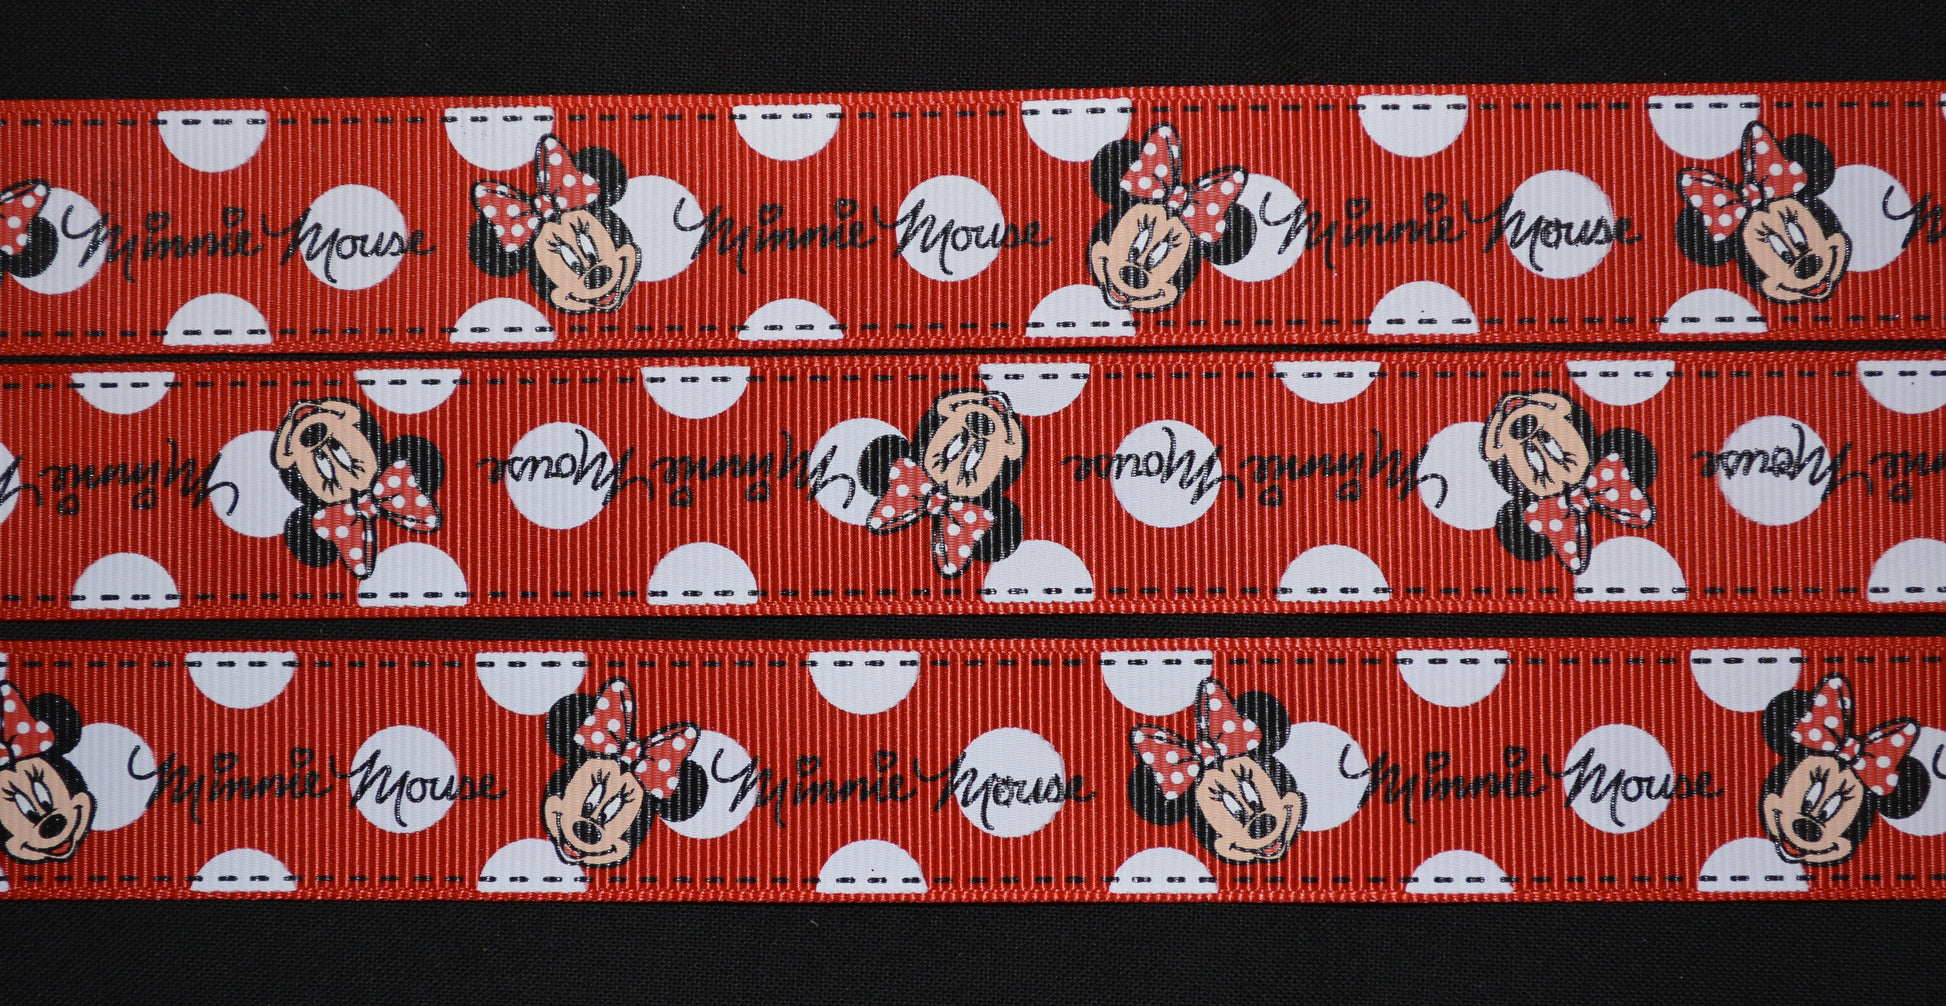 Grosgrain Printed Disney Mickey Heads Ribbon - Black - 5 Yards